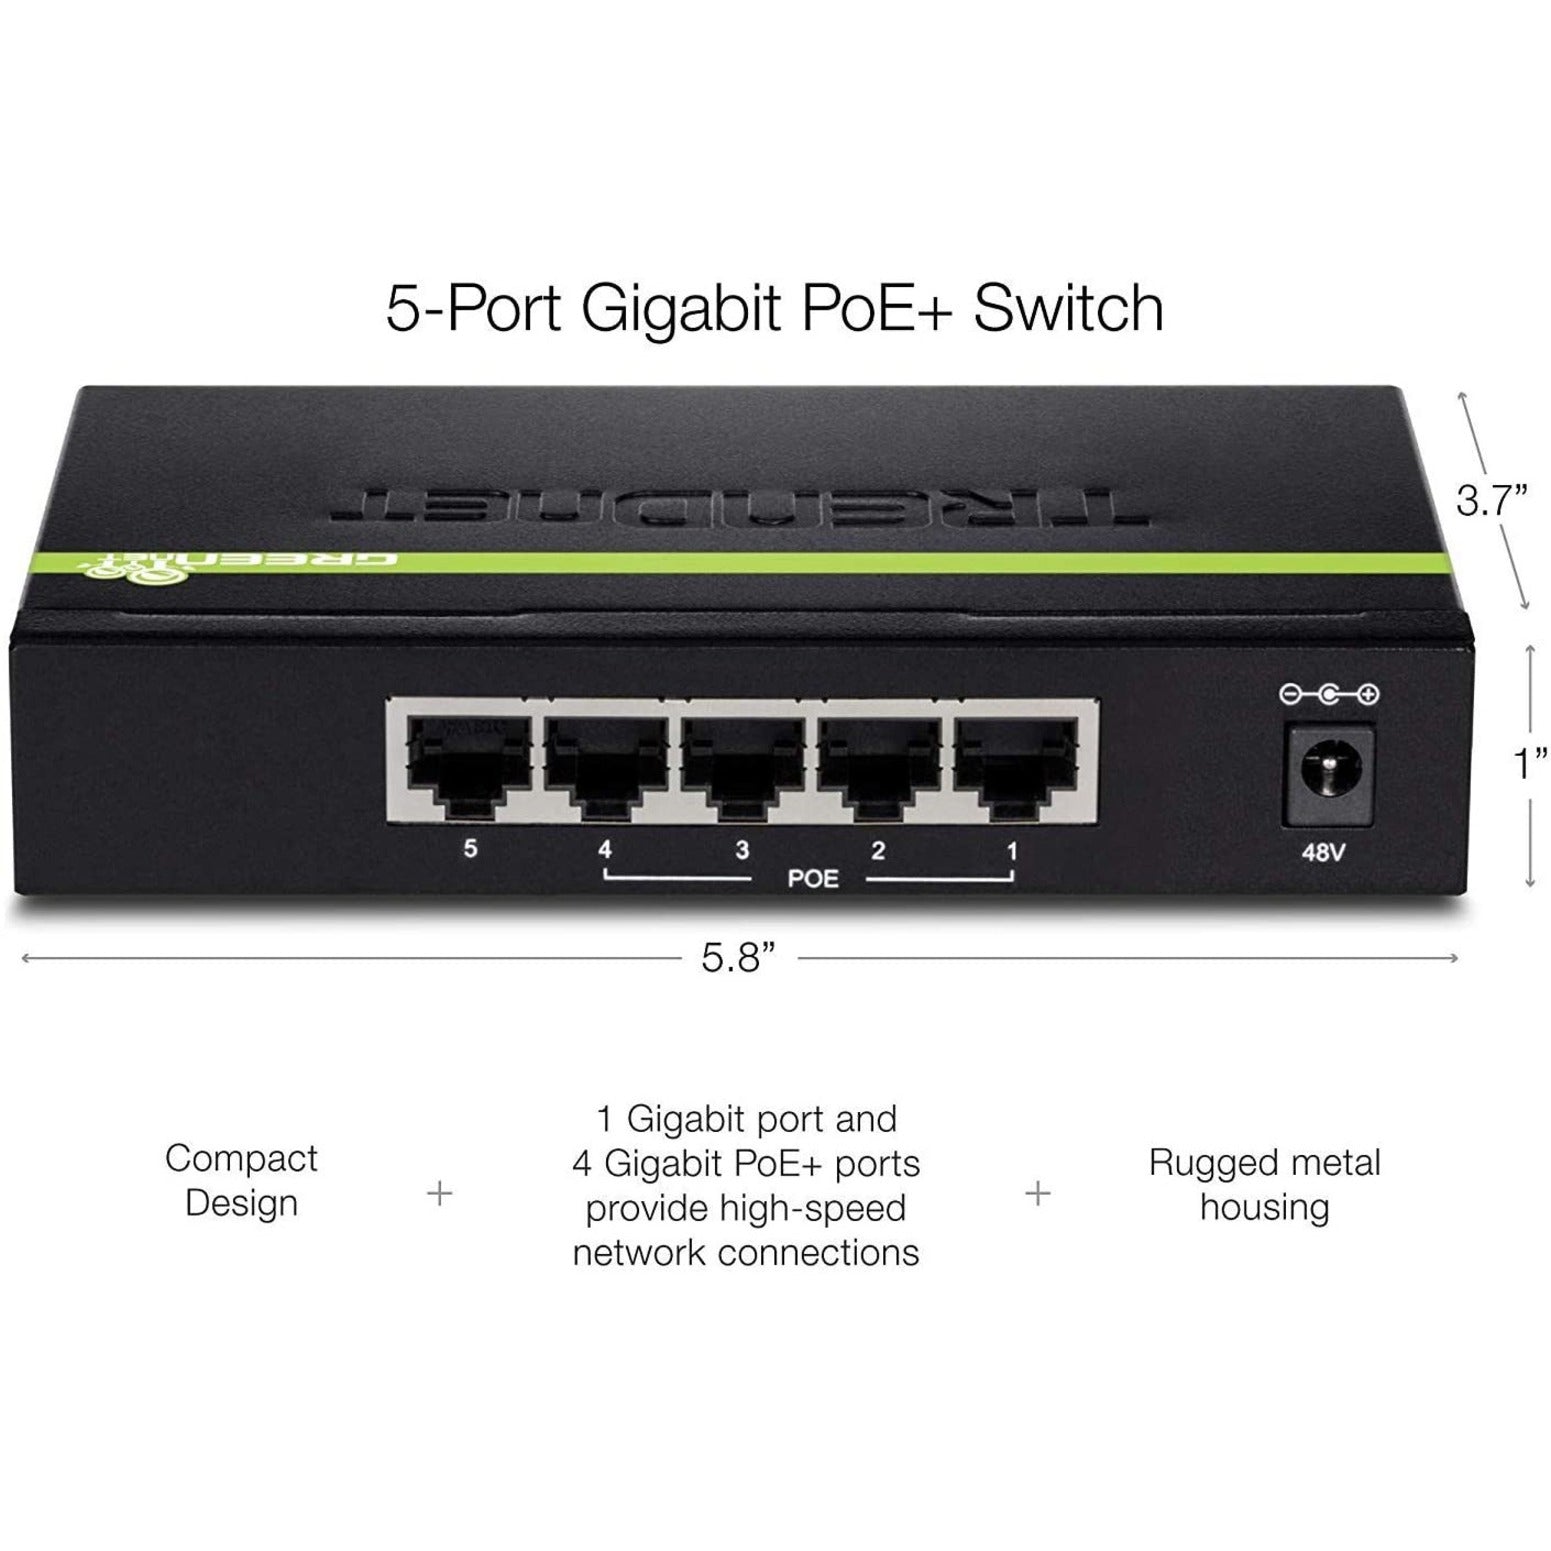 TRENDnet TPE-TG50g 5-port Gigabit PoE+ Switch, Lifetime Warranty, TAA and NDAA Compliant, CE and FCC Certified, Gigabit Ethernet, 4 PoE+ Ports, Taiwan Origin